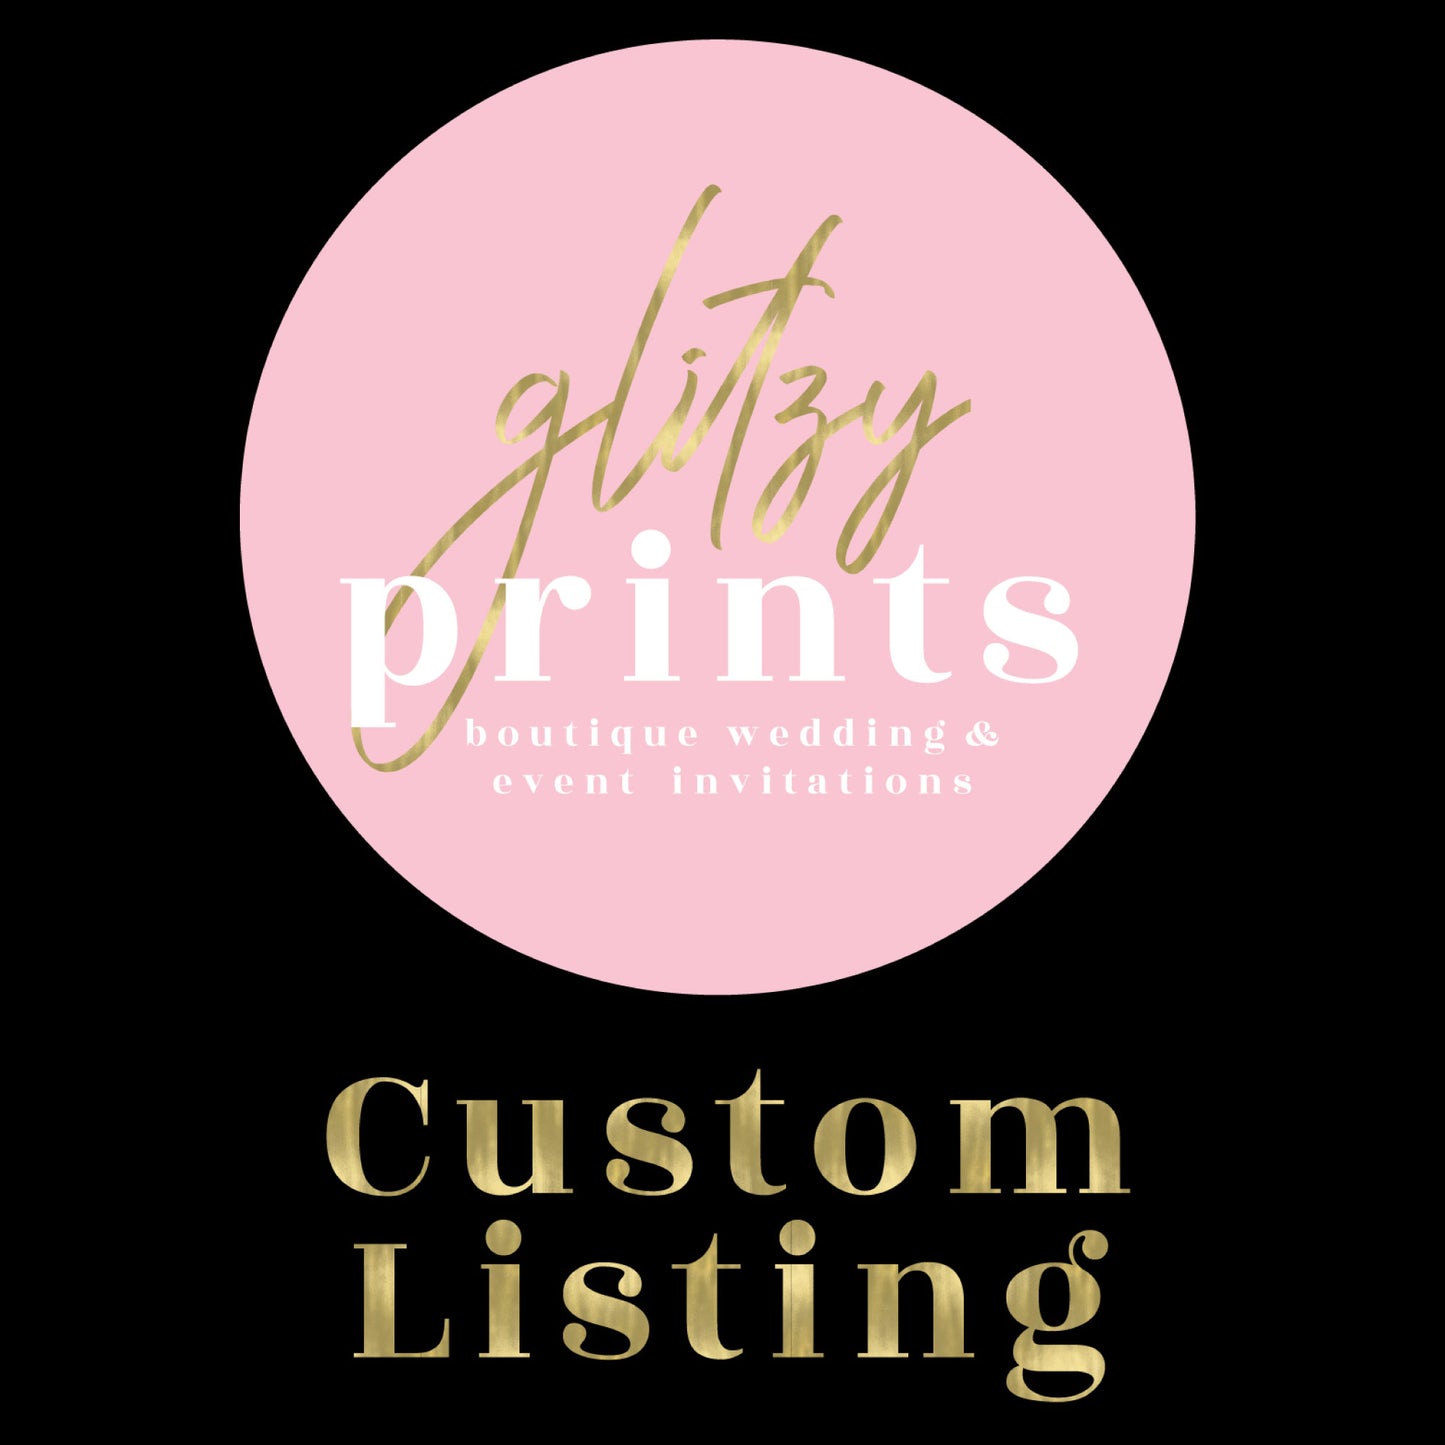 Custom Listing for Amy